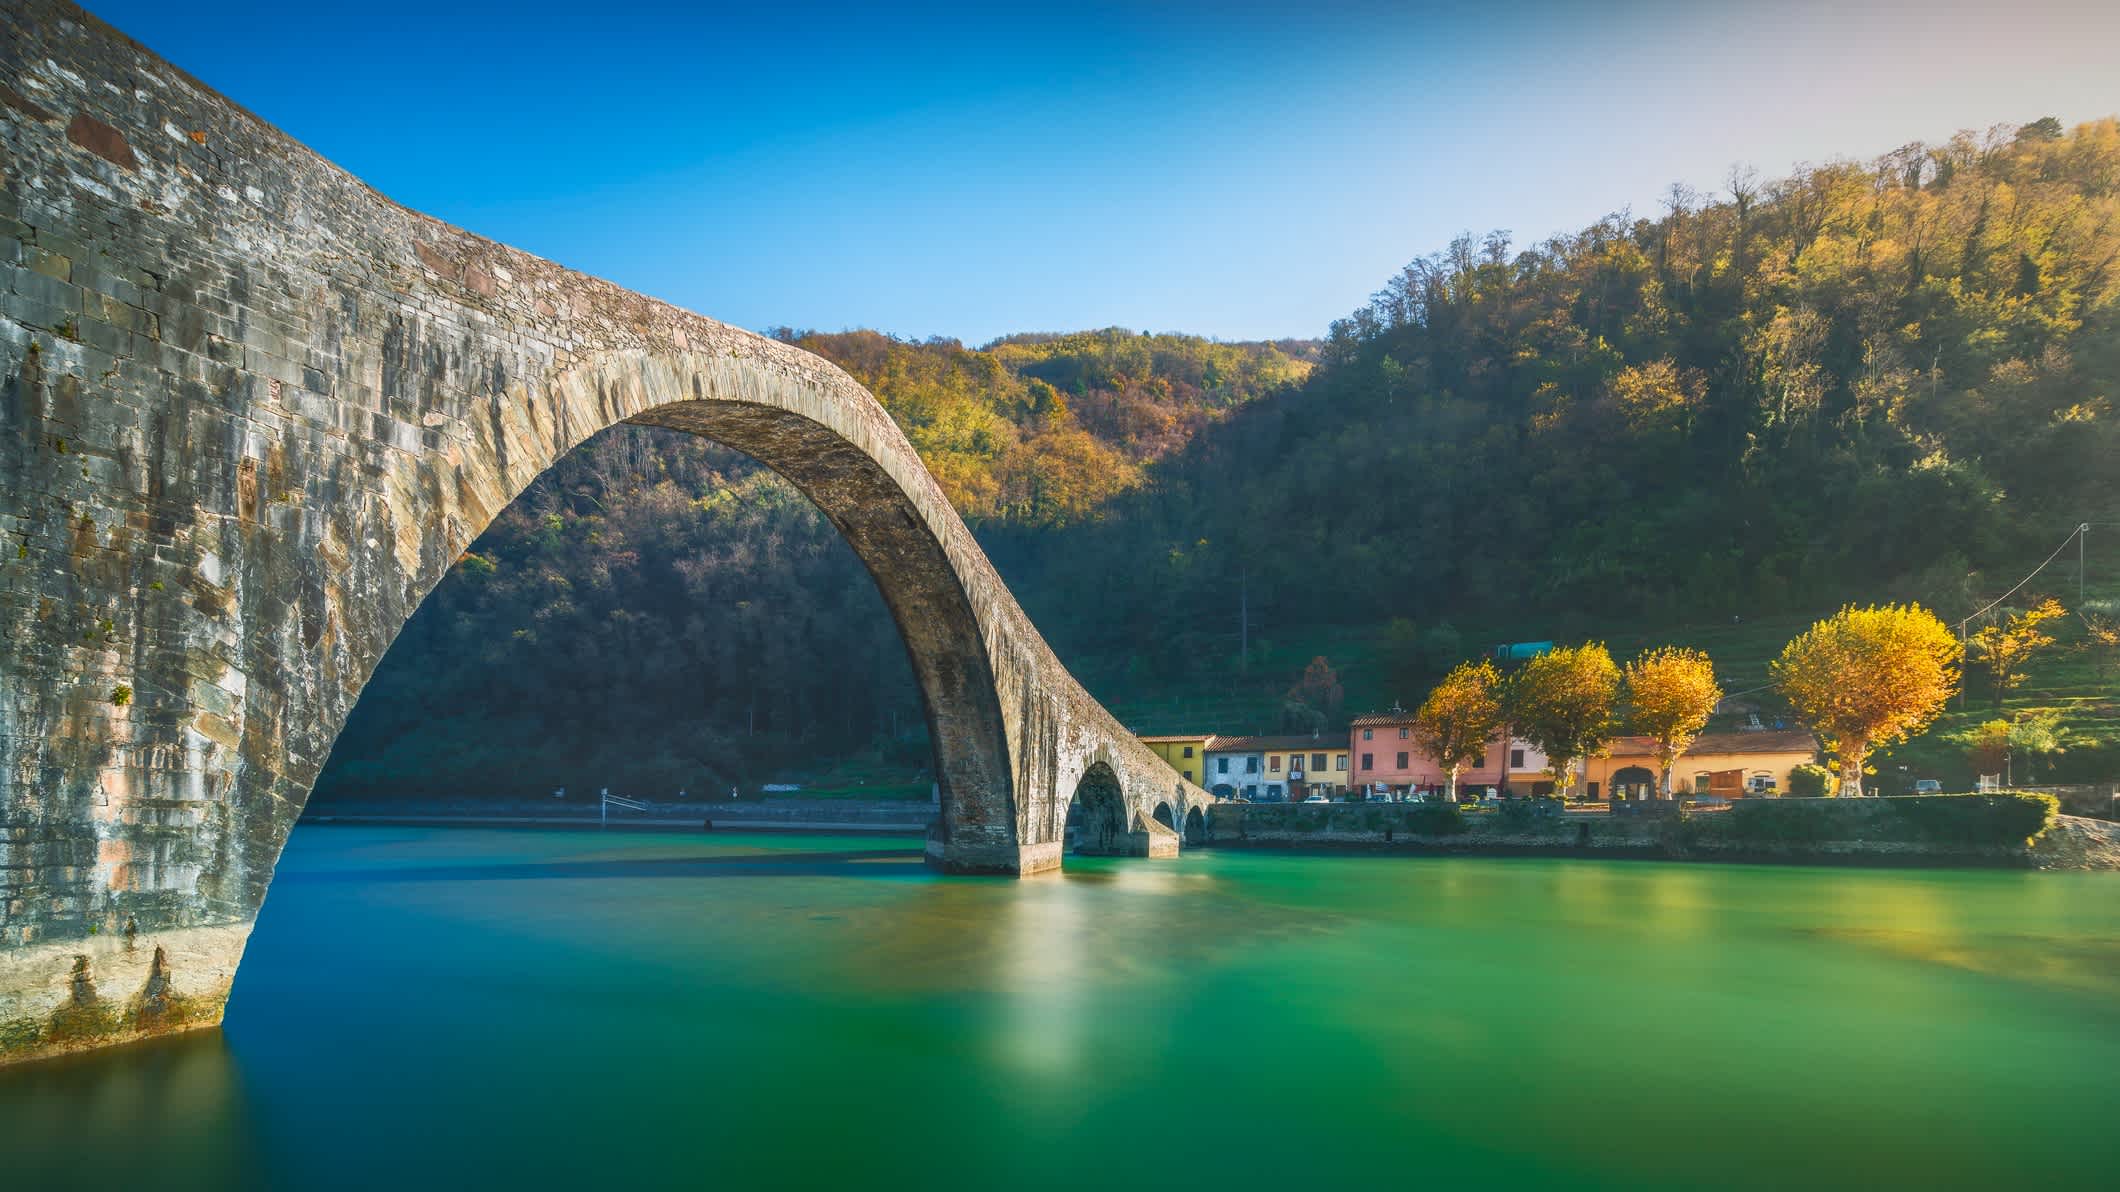 Brücke des Teufels oder Ponte della Maddalena in Garfagnana. Toskana, Italien